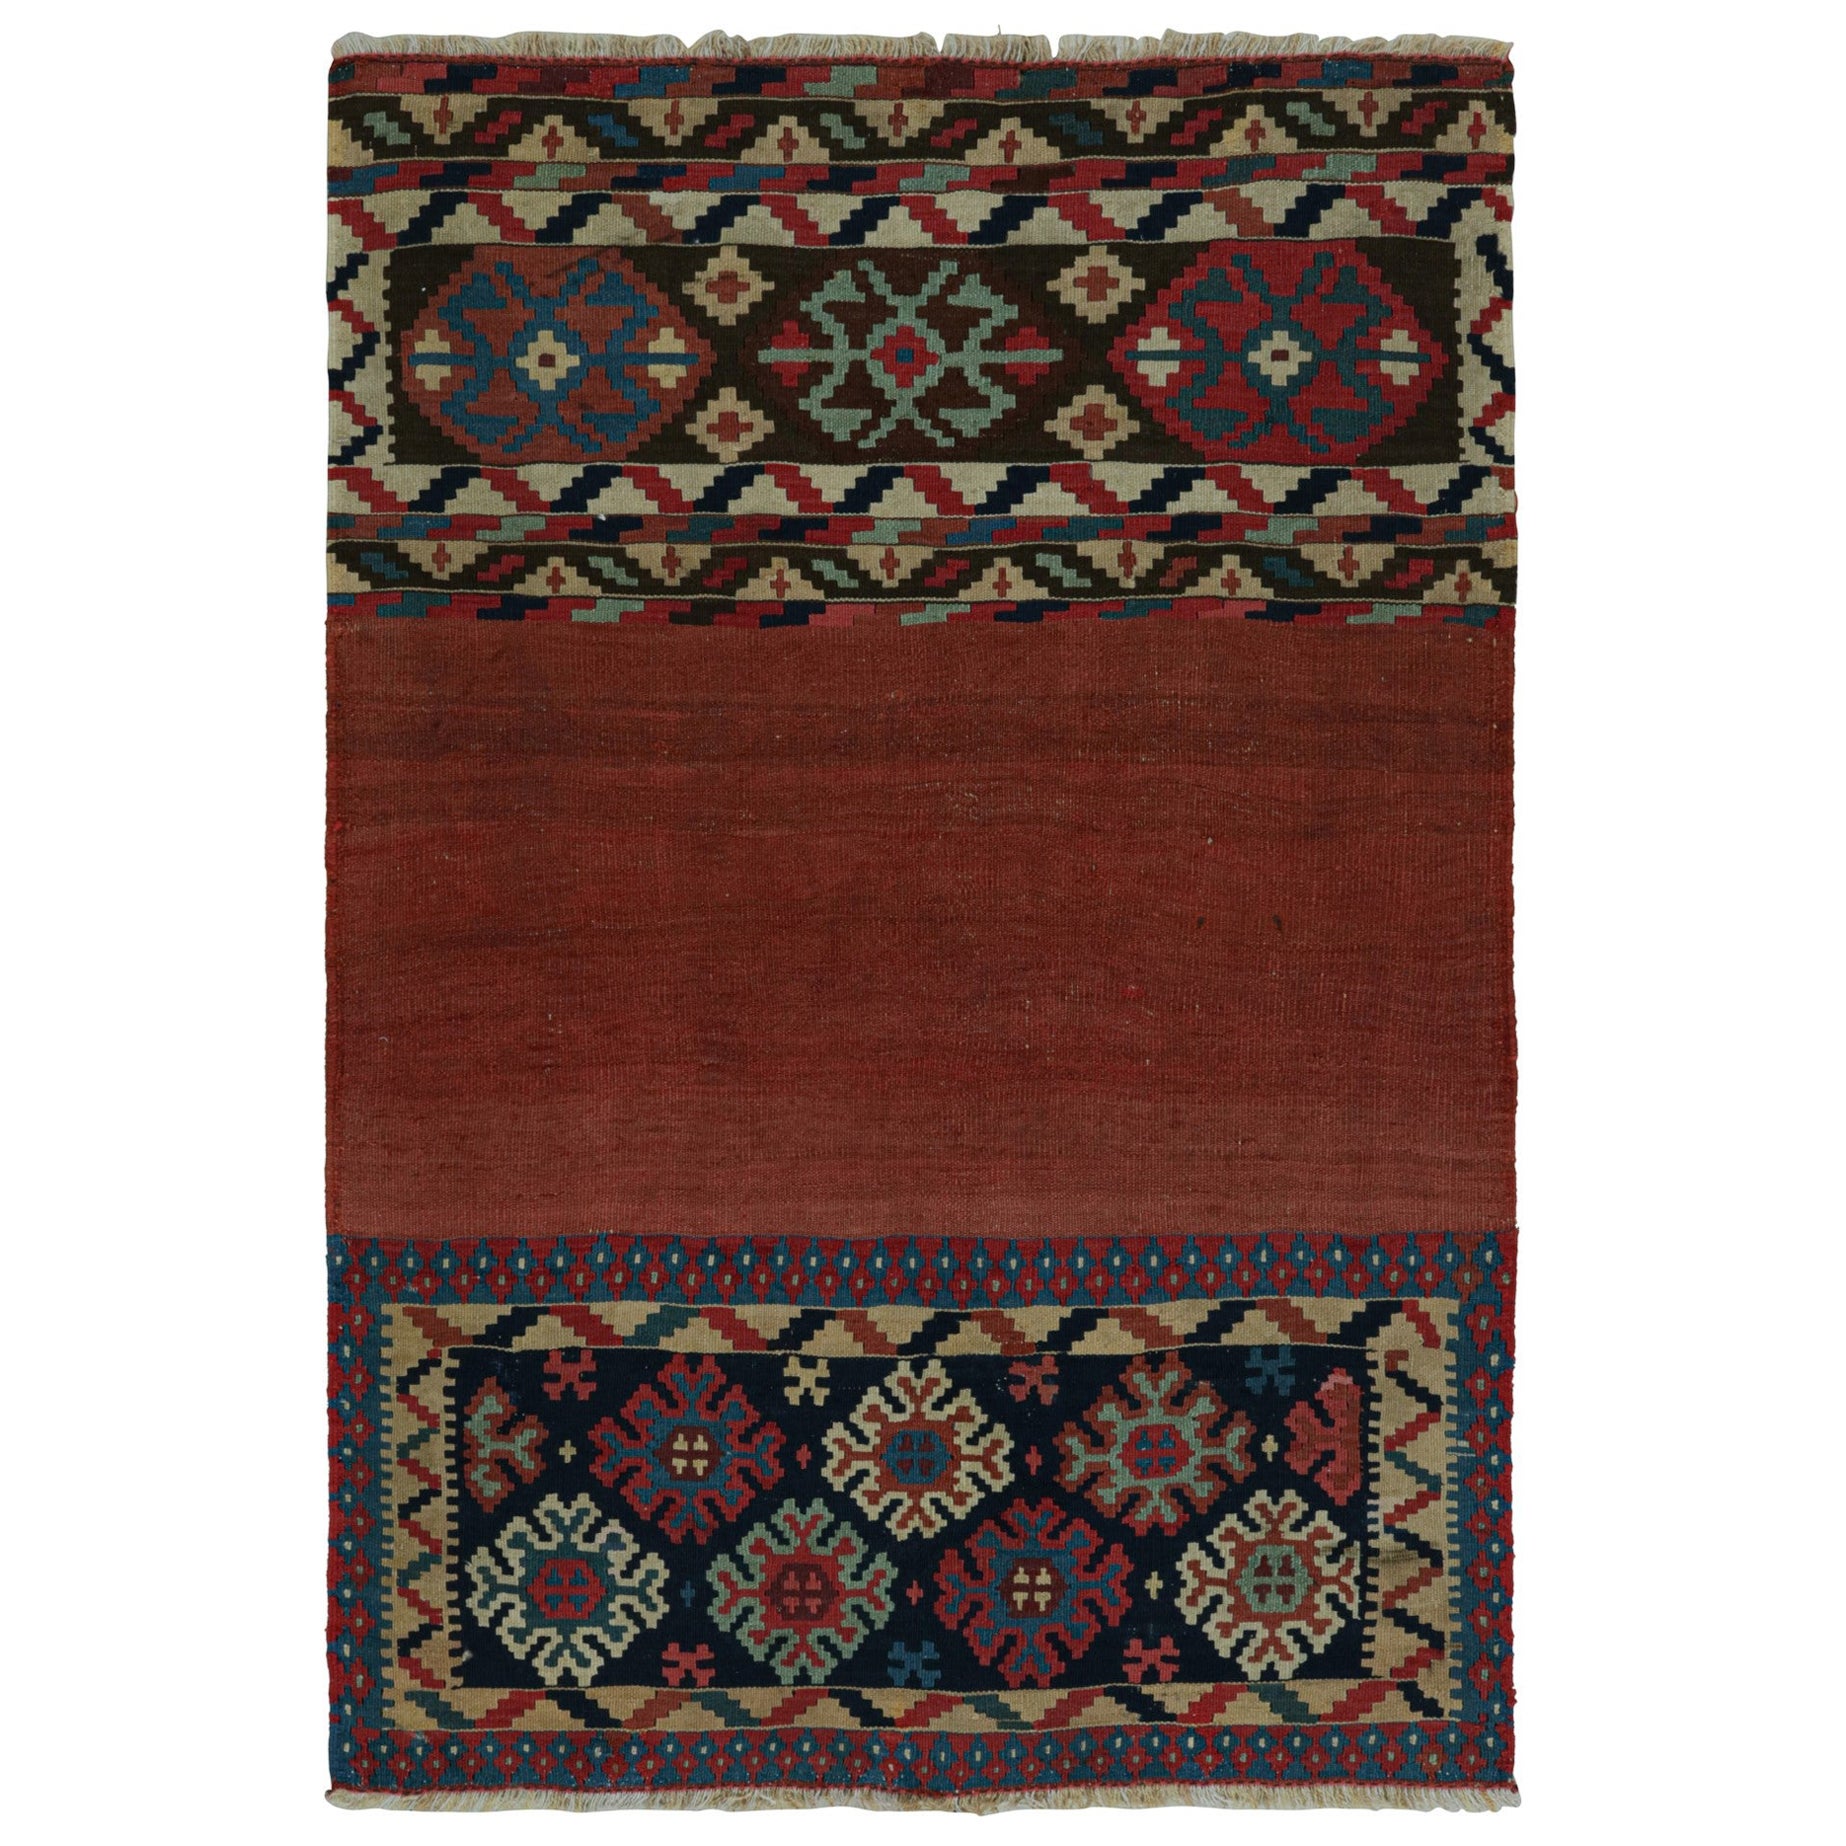 Rug & Kilim’s Afghan Tribal Kilim Rug in Red, with Colorful Geometric Patterns